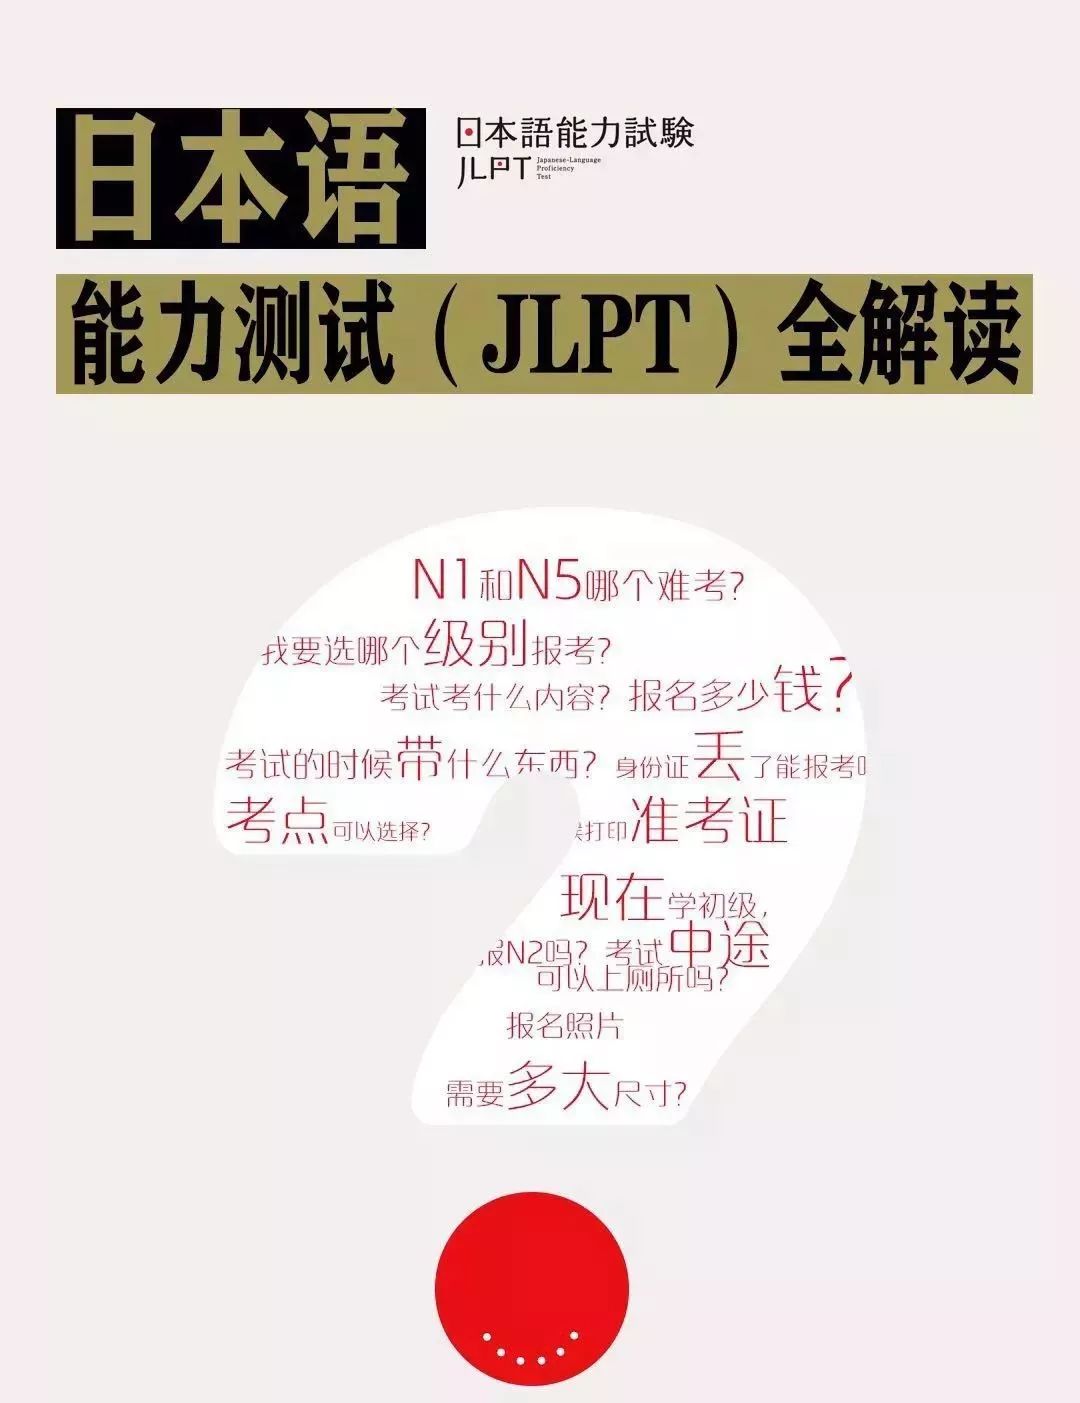 Jlpt能力考试 注册提醒 一篇文章看懂年最新日本语能力考试 标日电子叔 微信公众号文章阅读 Wemp